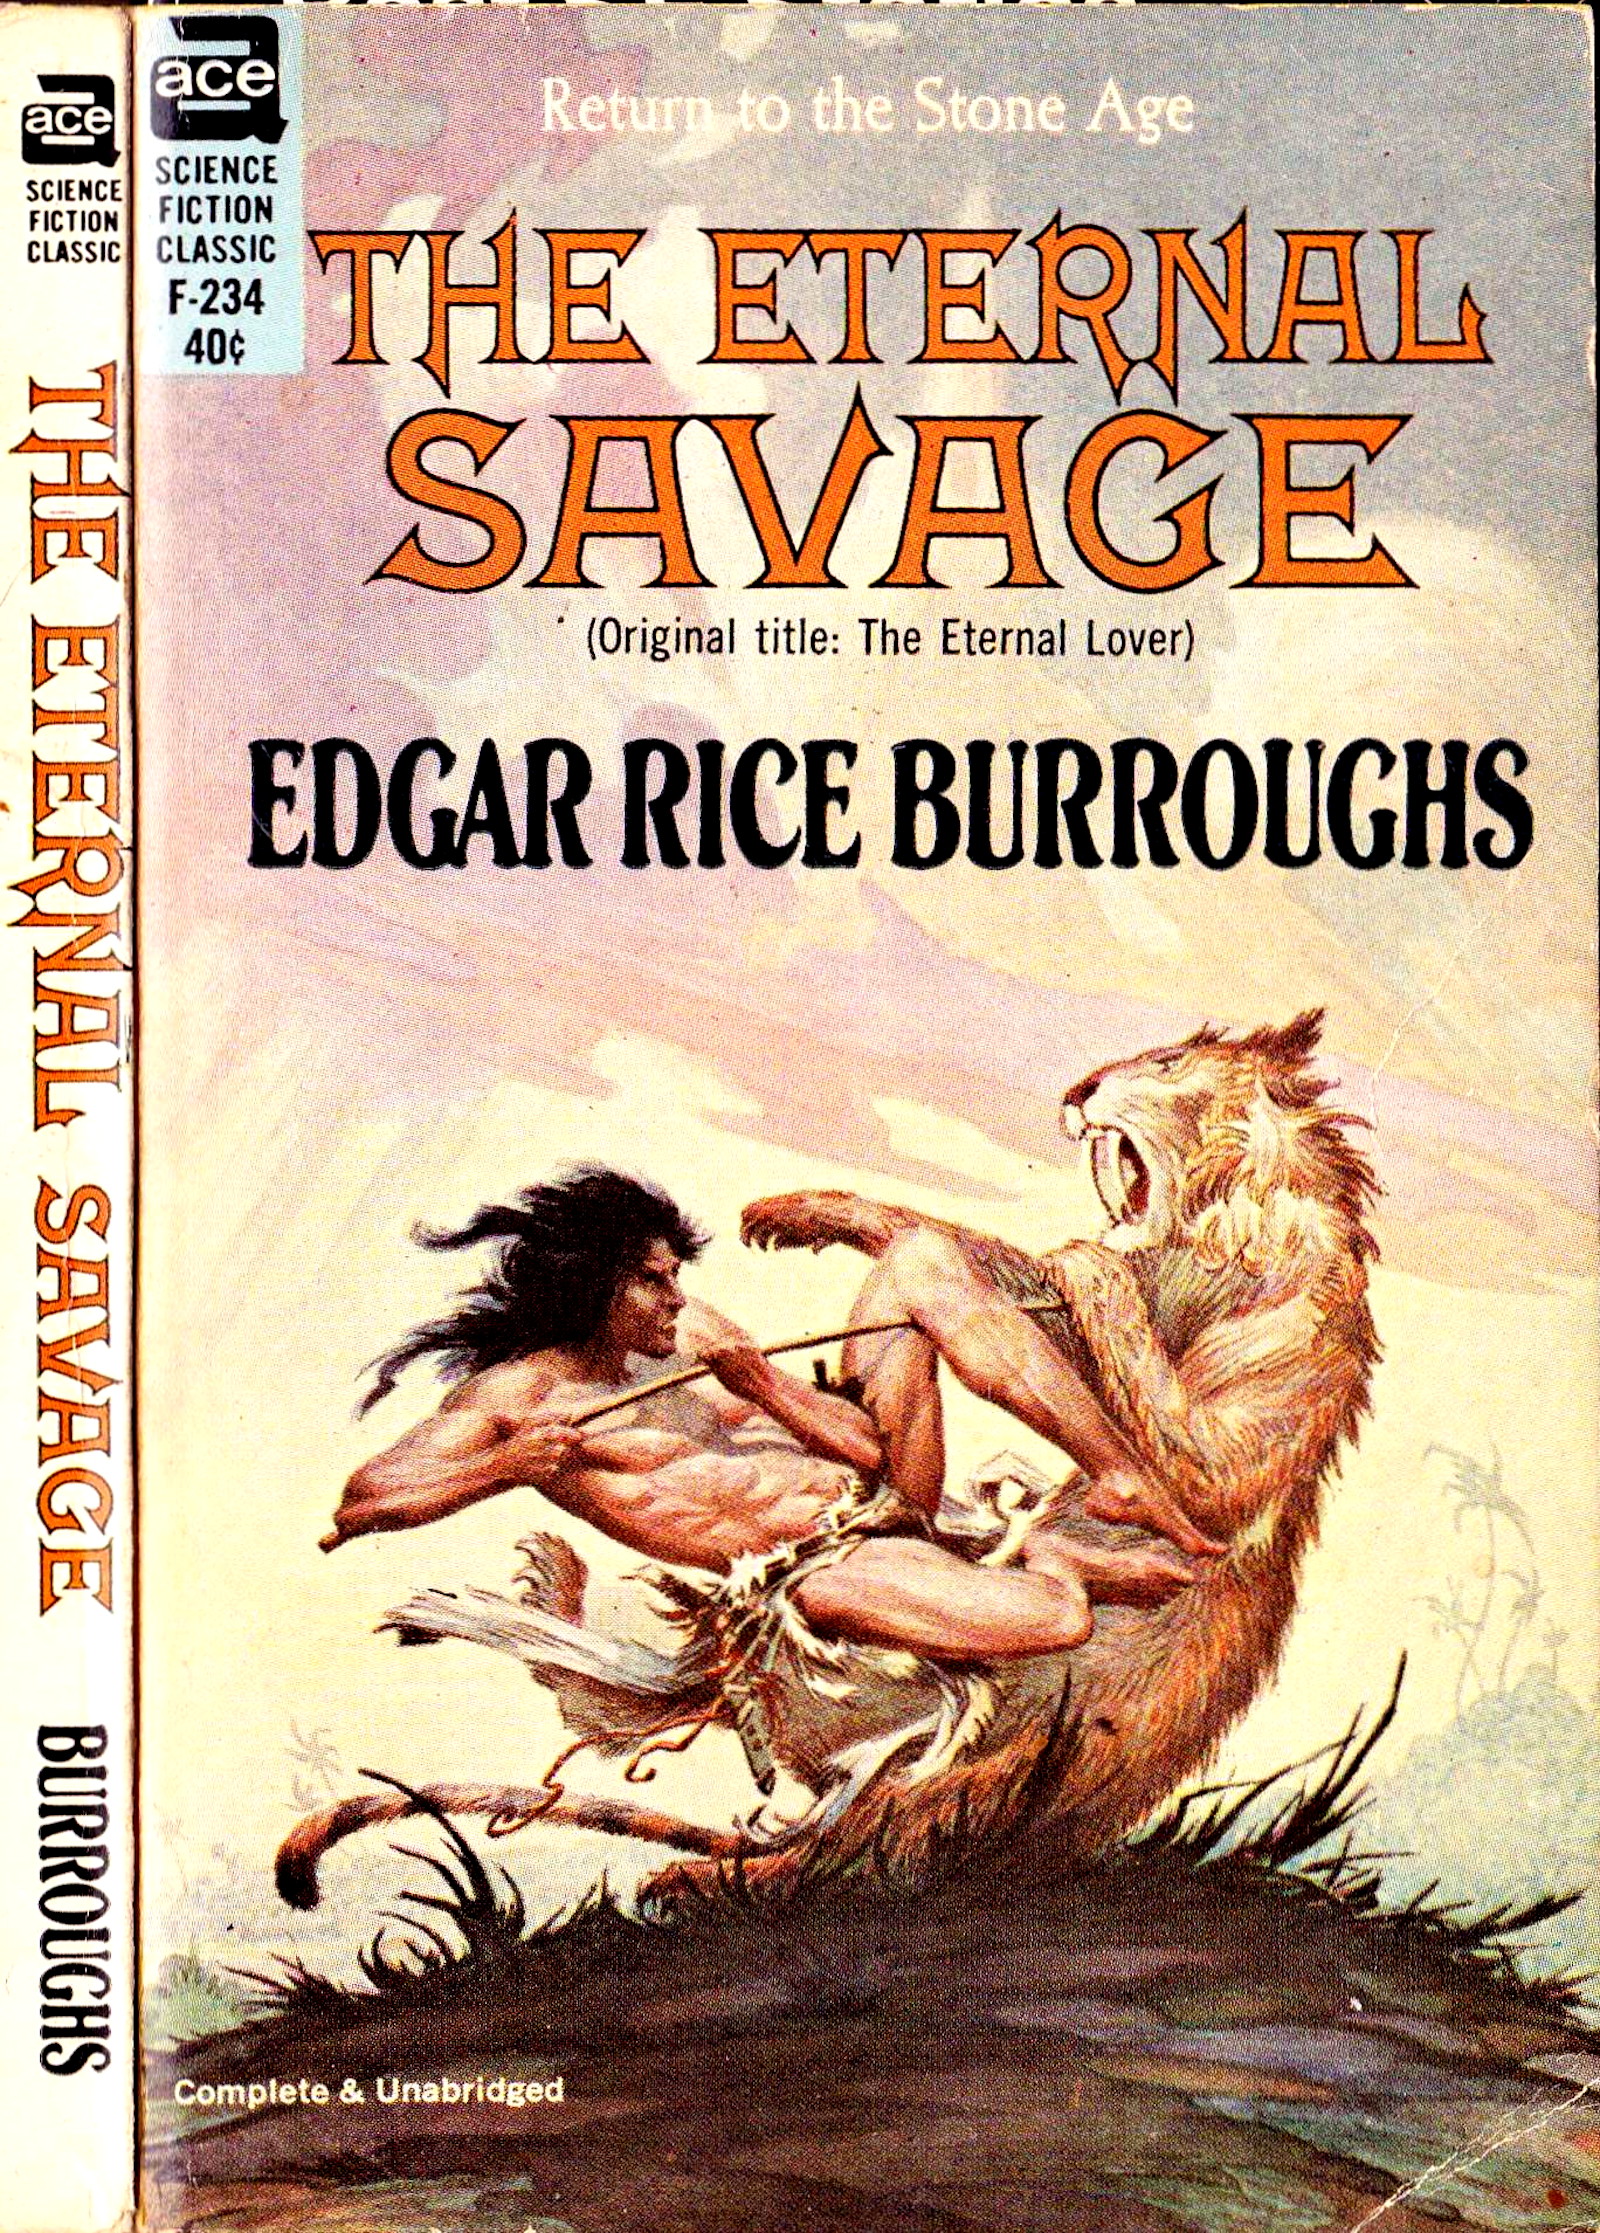 The Eternal Savage, by Edgar Rice Burroughs—A Project Gutenberg eBook